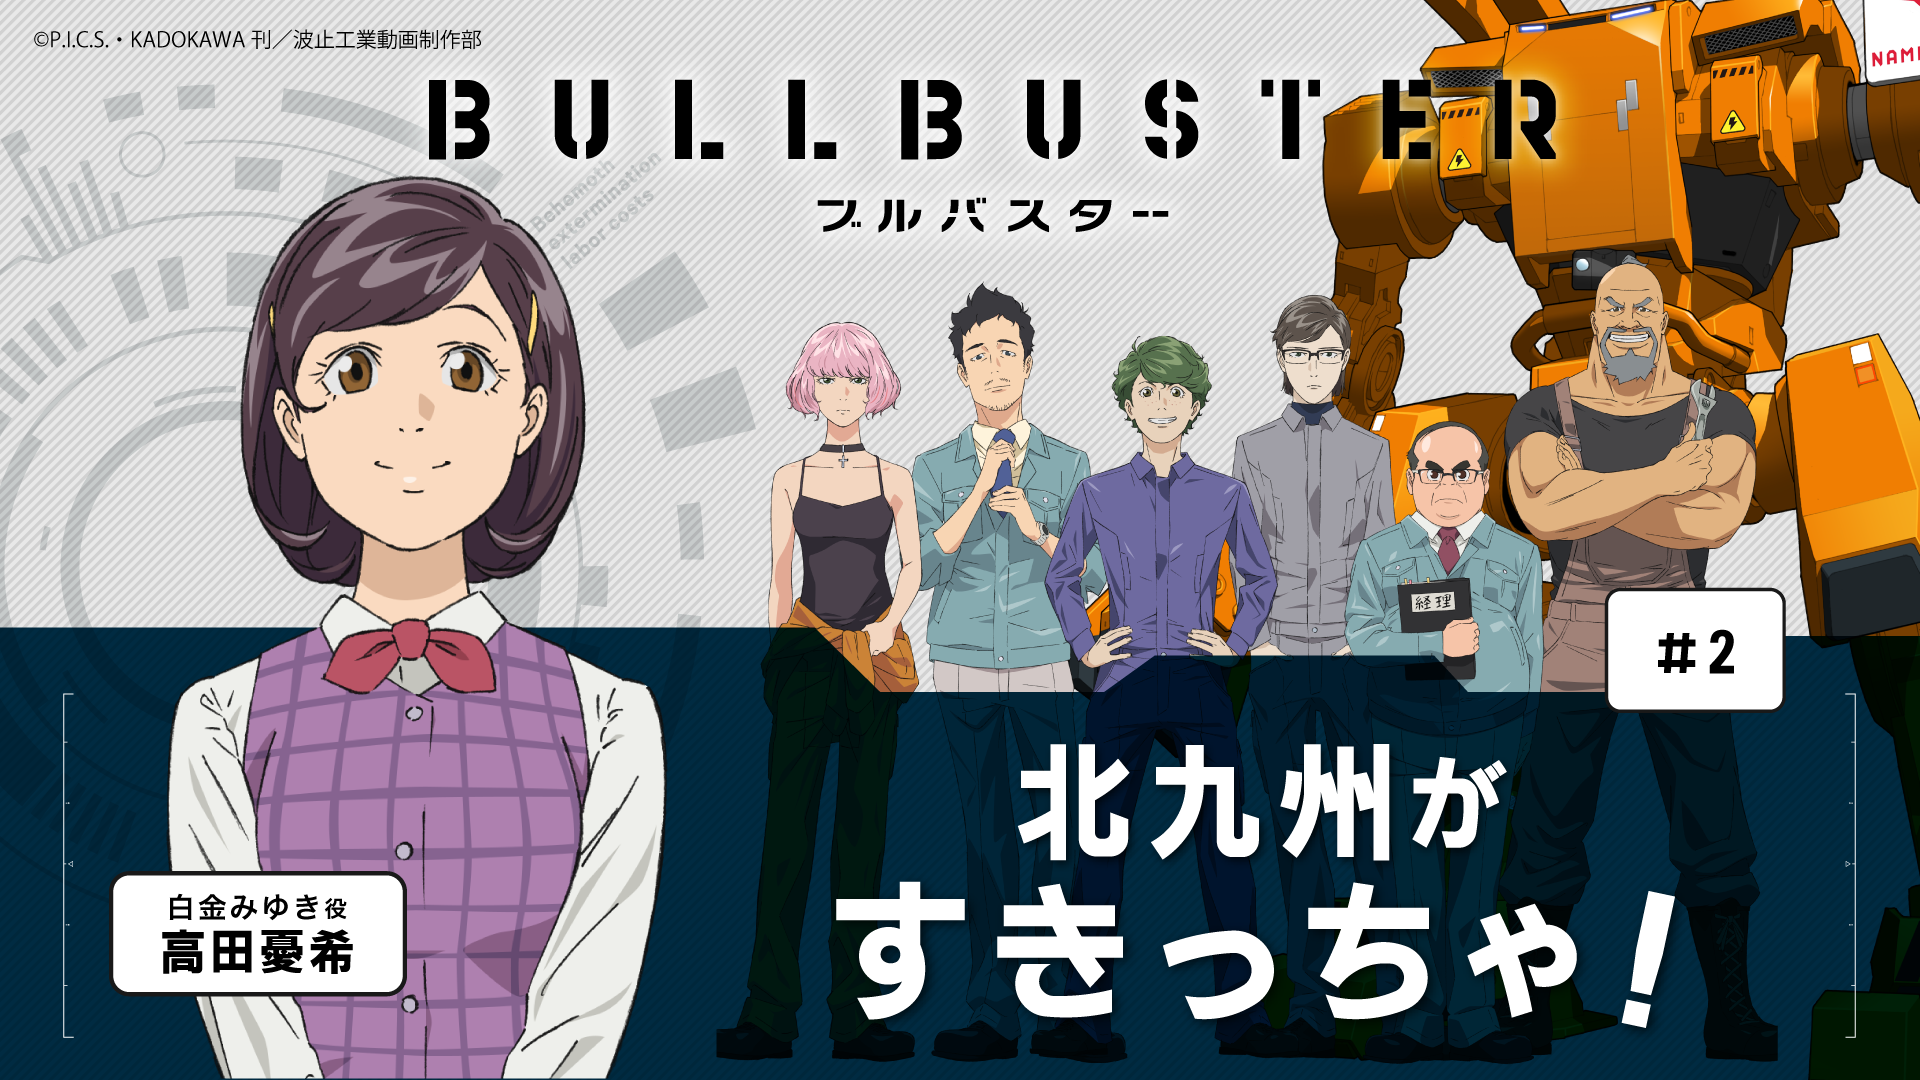 Anime Mecha Bullbuster Mendapatkan Adaptasi Anime Dan Akan Mulai Tayang  Pada Tahun 2023  AniEvo ID  Media Otaku Berita Info Seputar Anime dan  Otaku